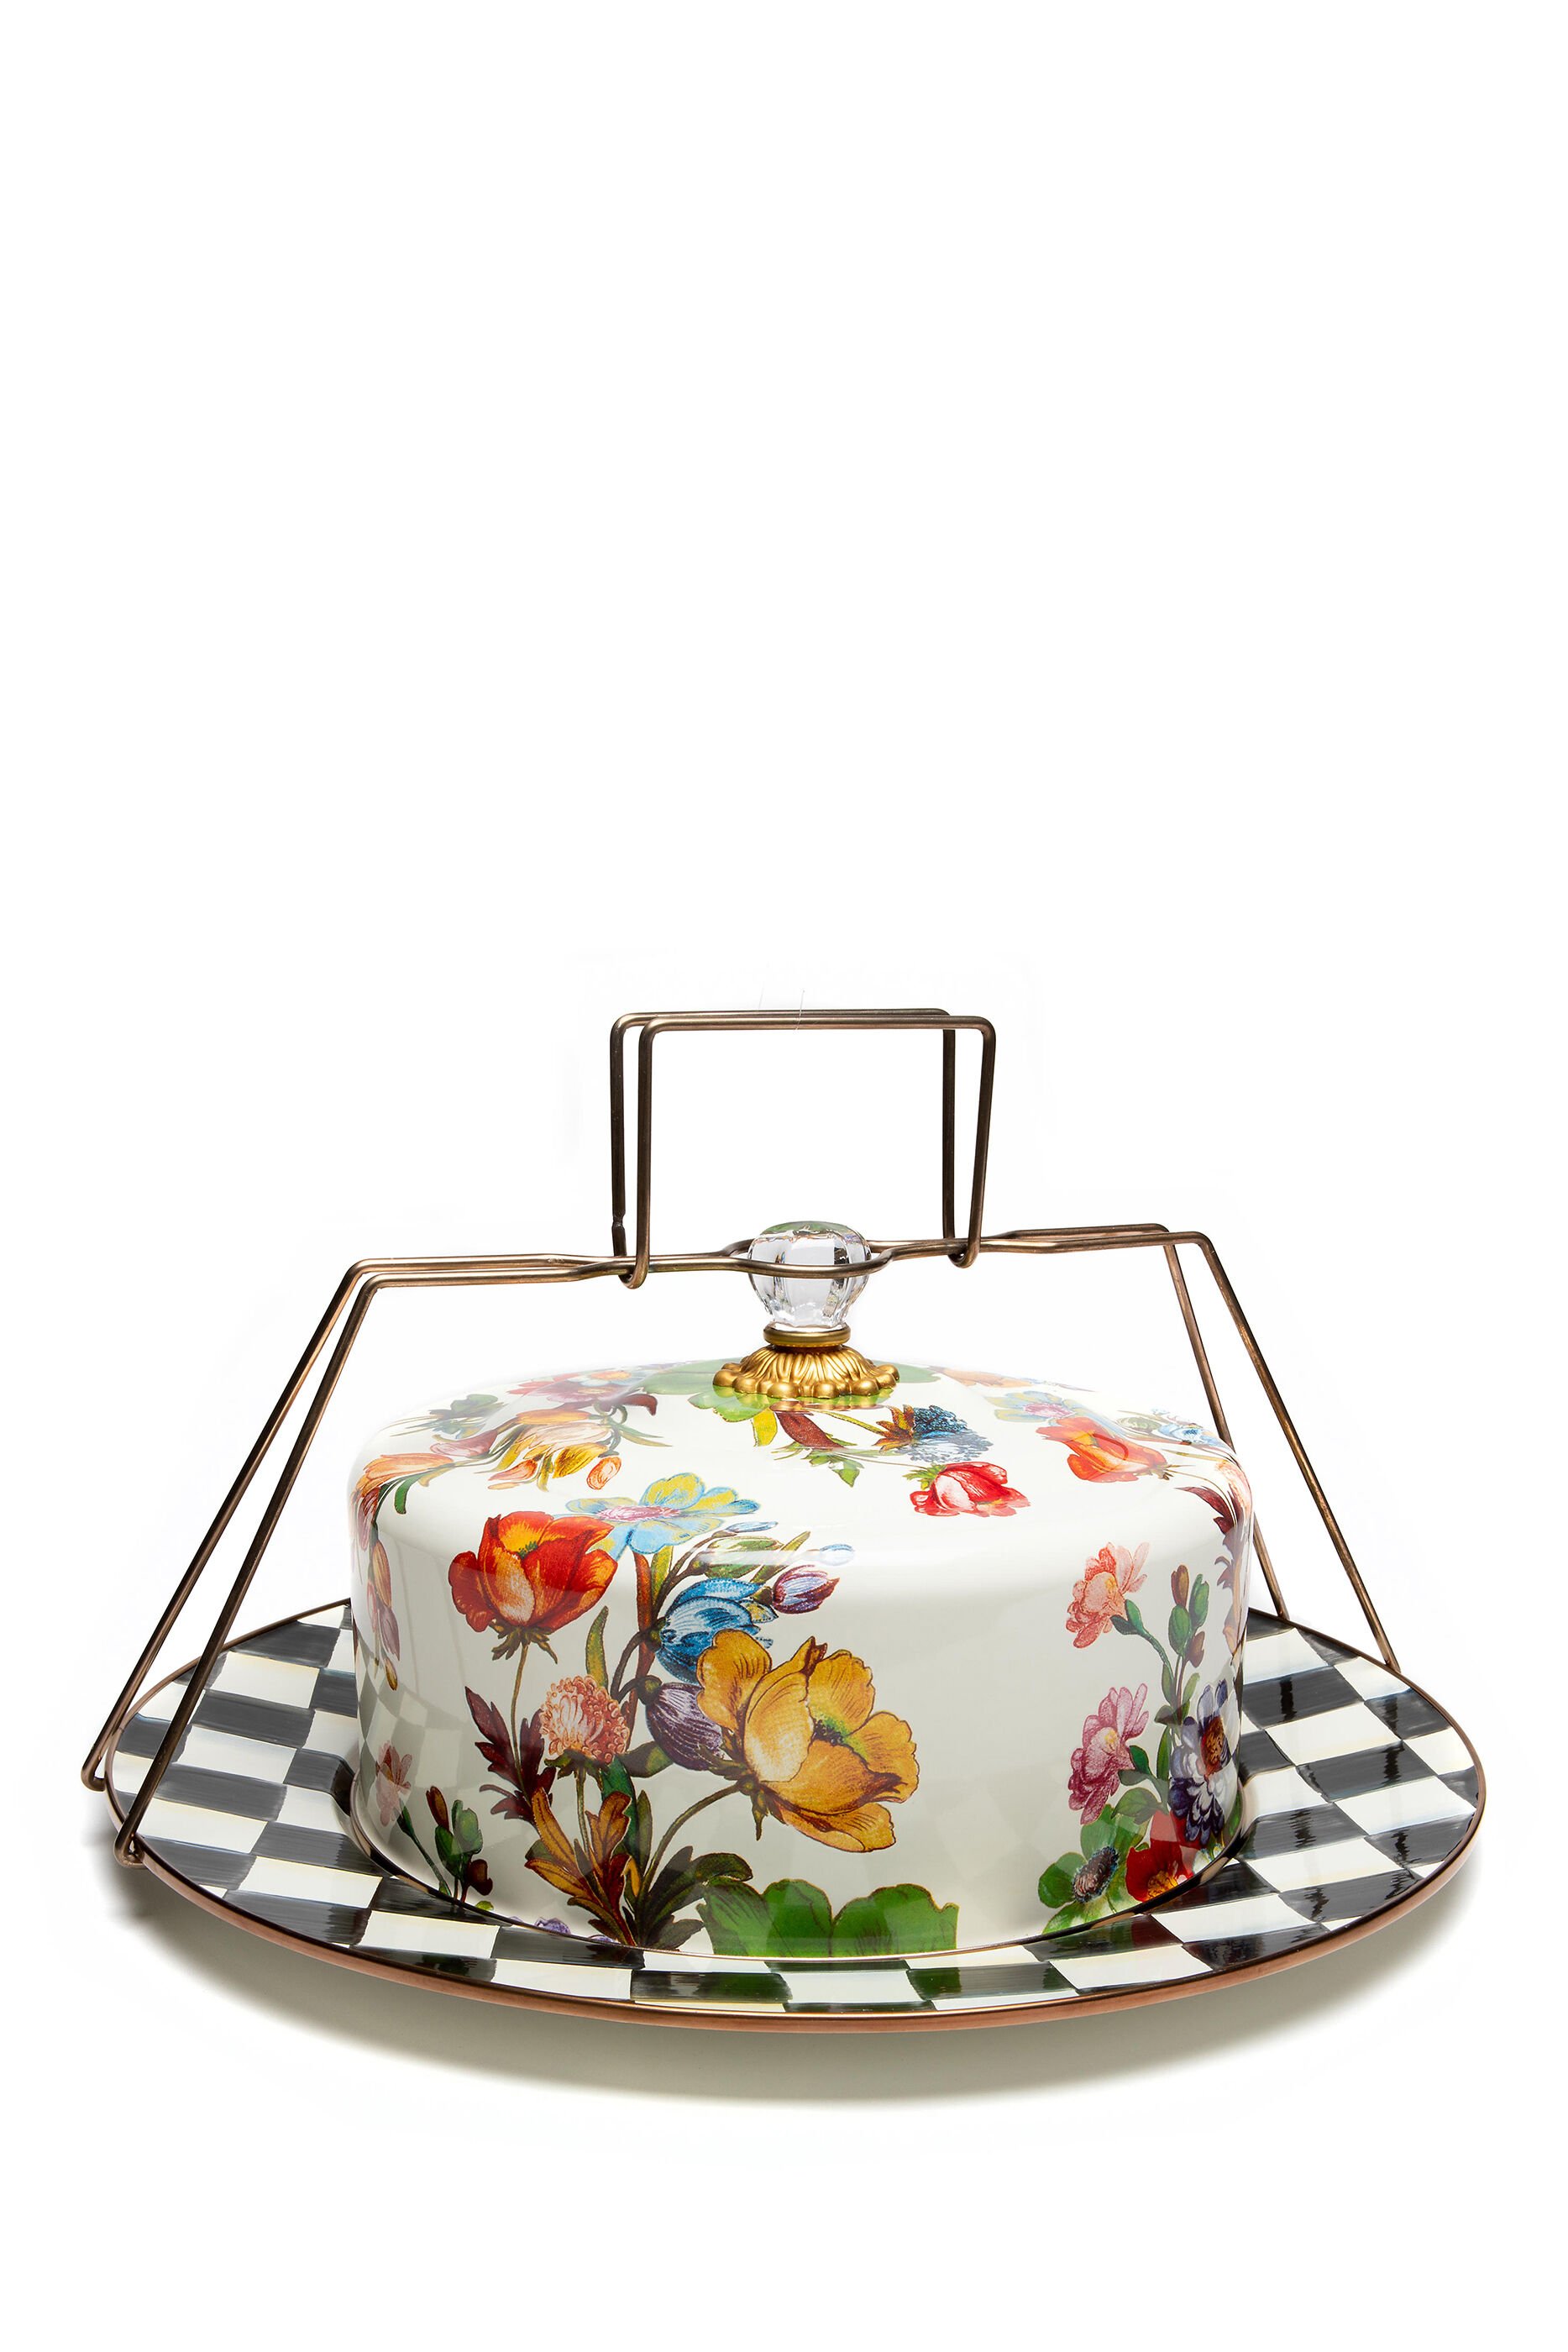 Vintage Tupperware Cake Carrier White Base No.684-2 ~ 685-1 | eBay